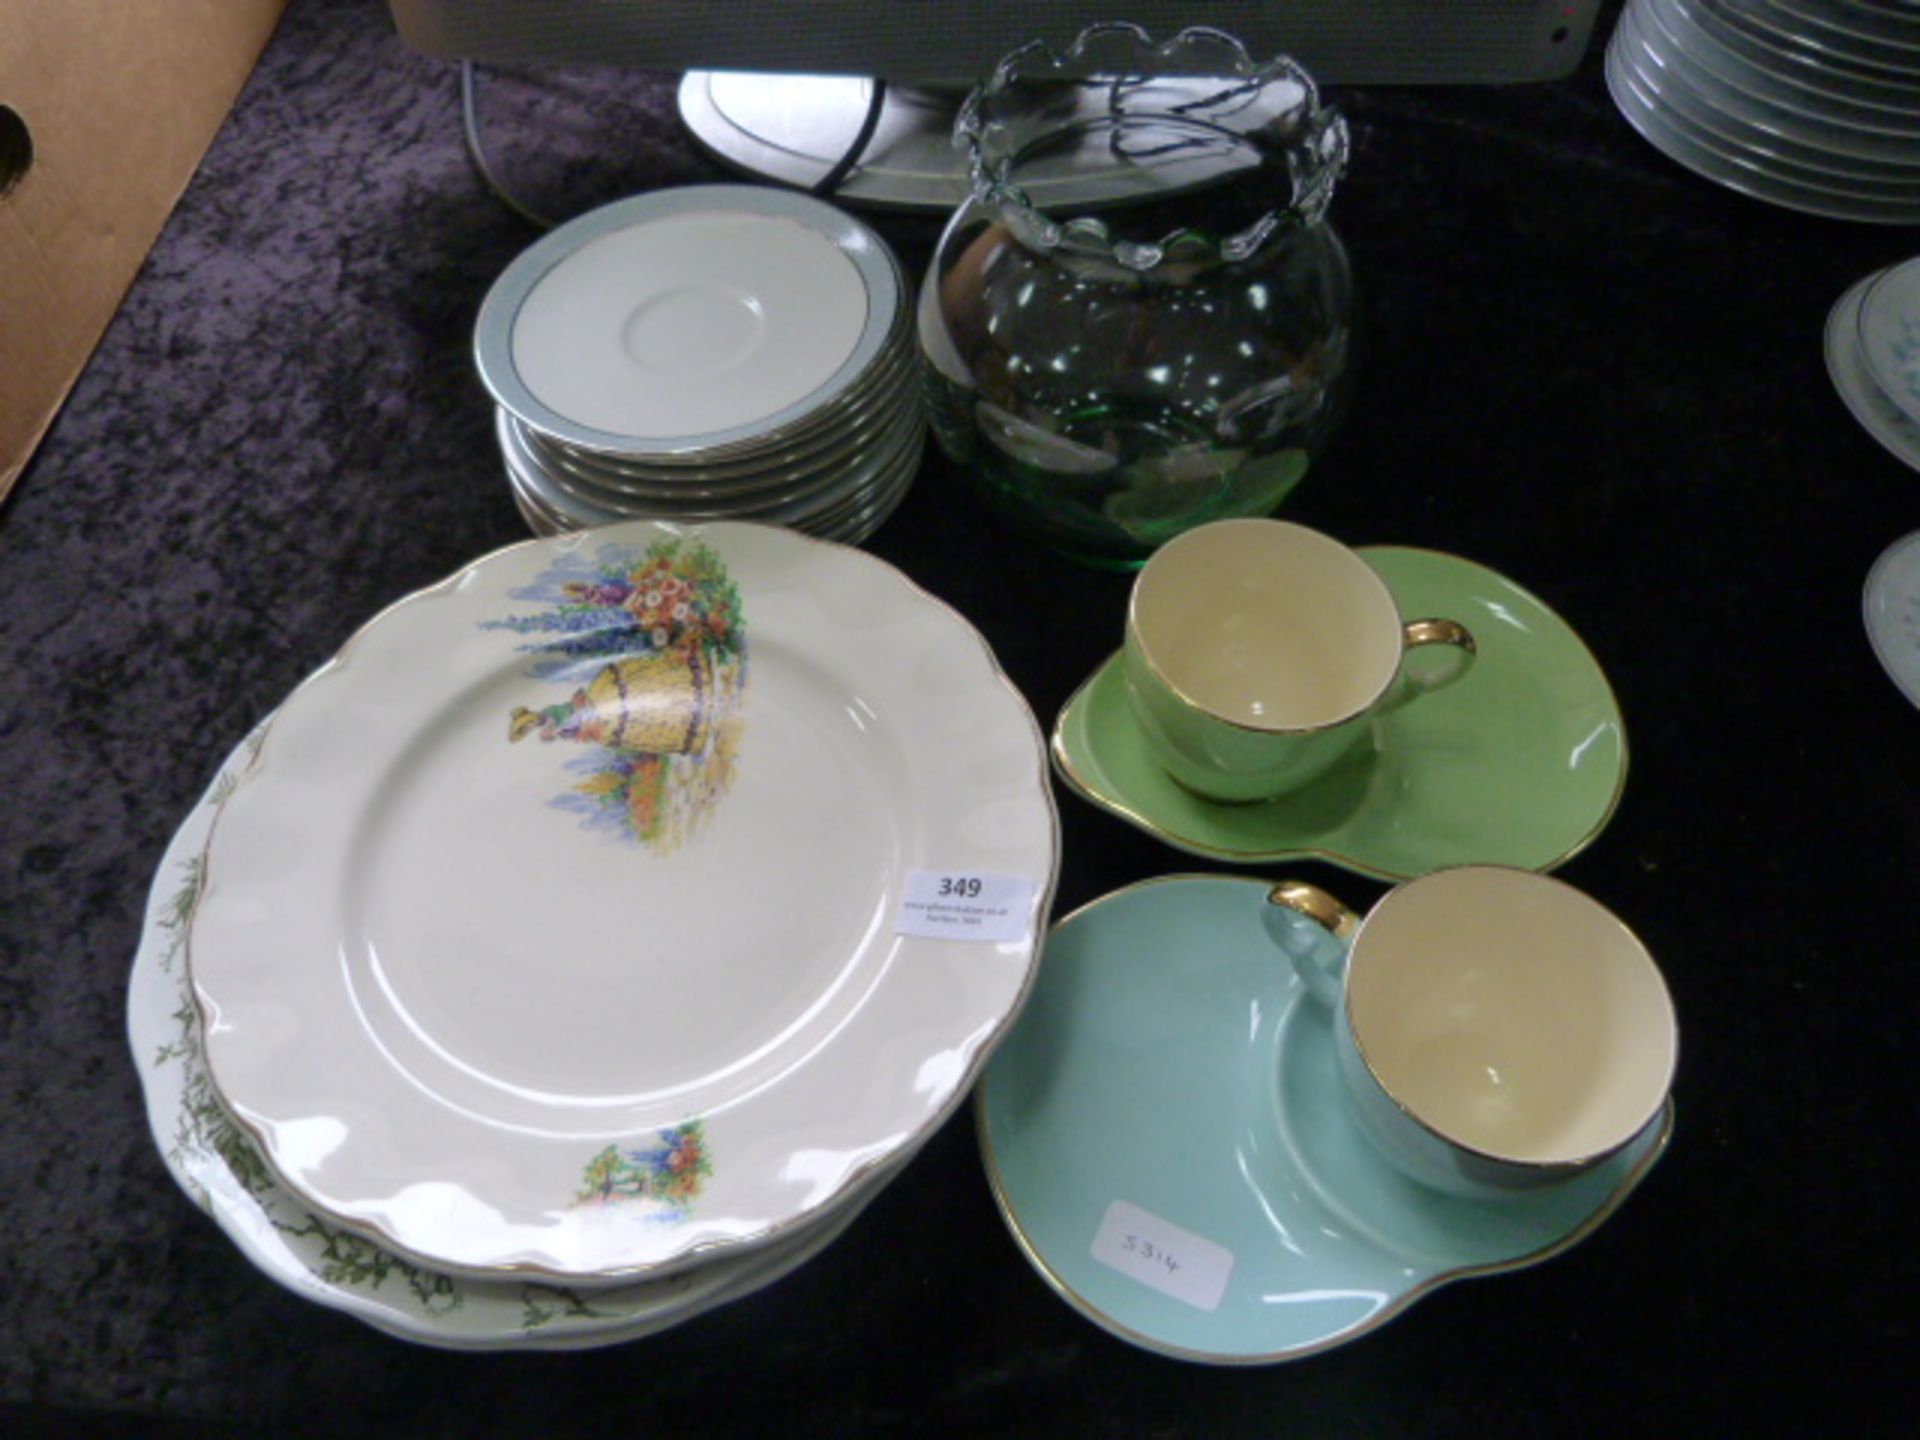 Crown Devon Tea and Biscuit Sets, Decorative Plate